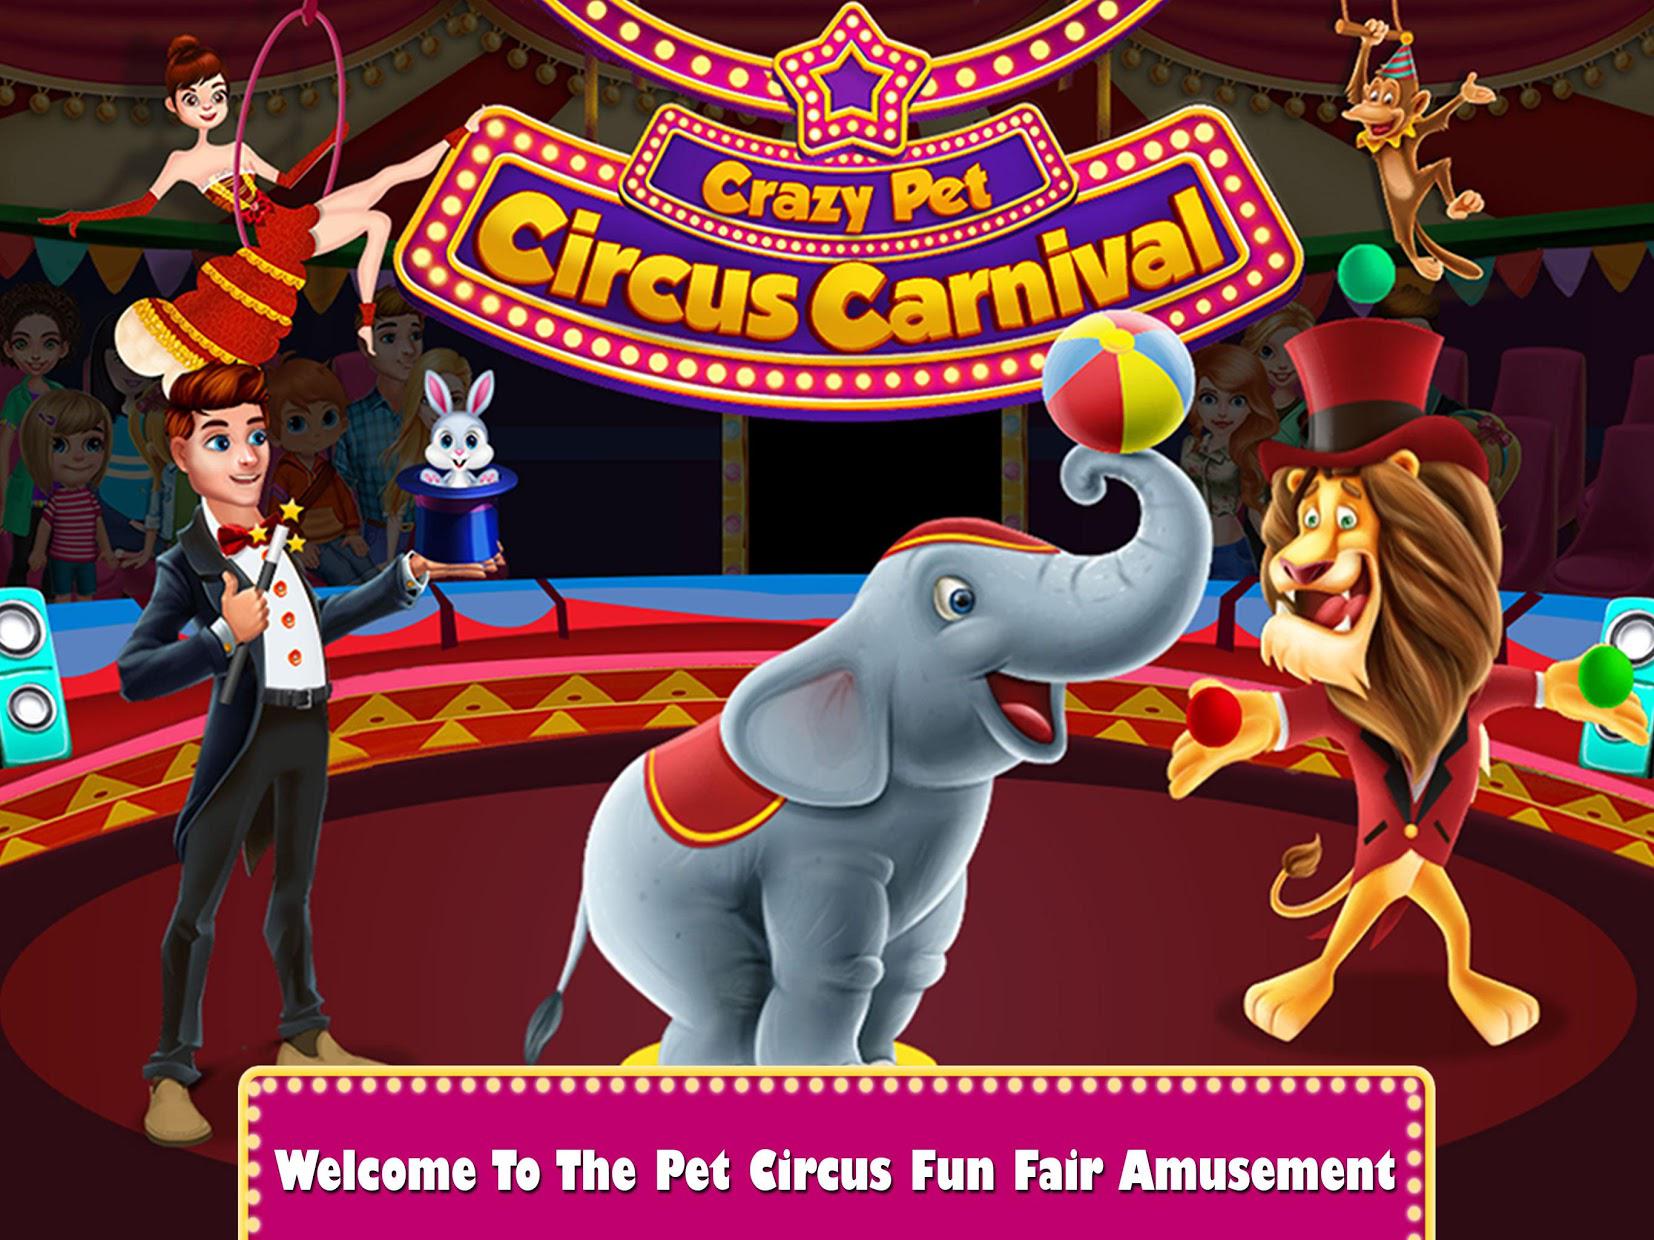 Crazy Pet Circus Carnival - Fun Fair Amusement